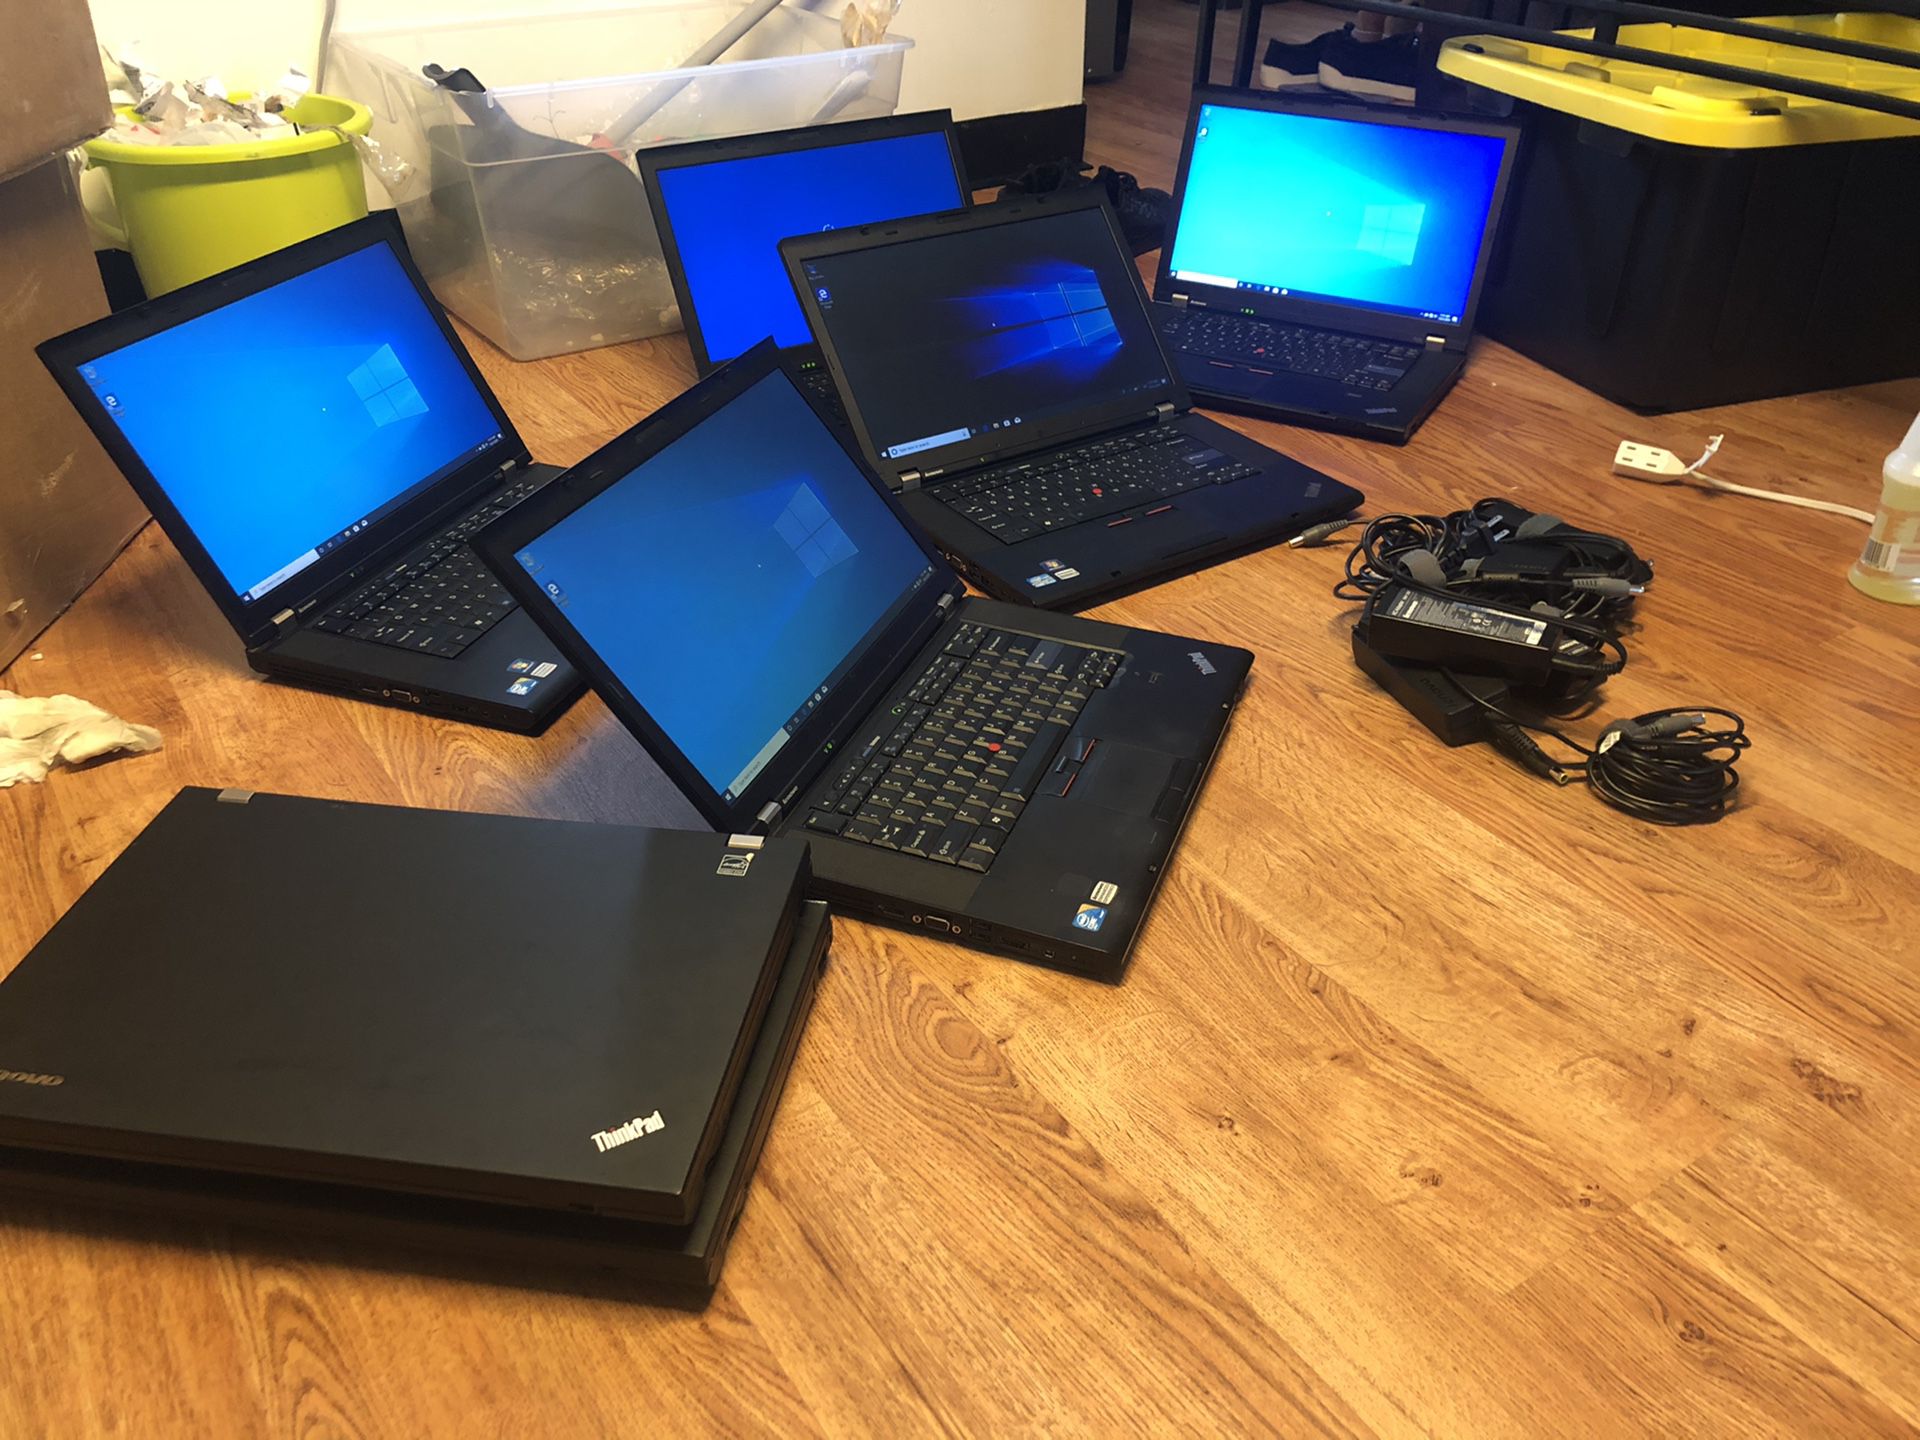 Lenovo Thinkpad laptops Intel i7/i5@ 2.5GHz, Hard drive 320gbRam 4gb, webcam, dvd, wifi,$110for each one